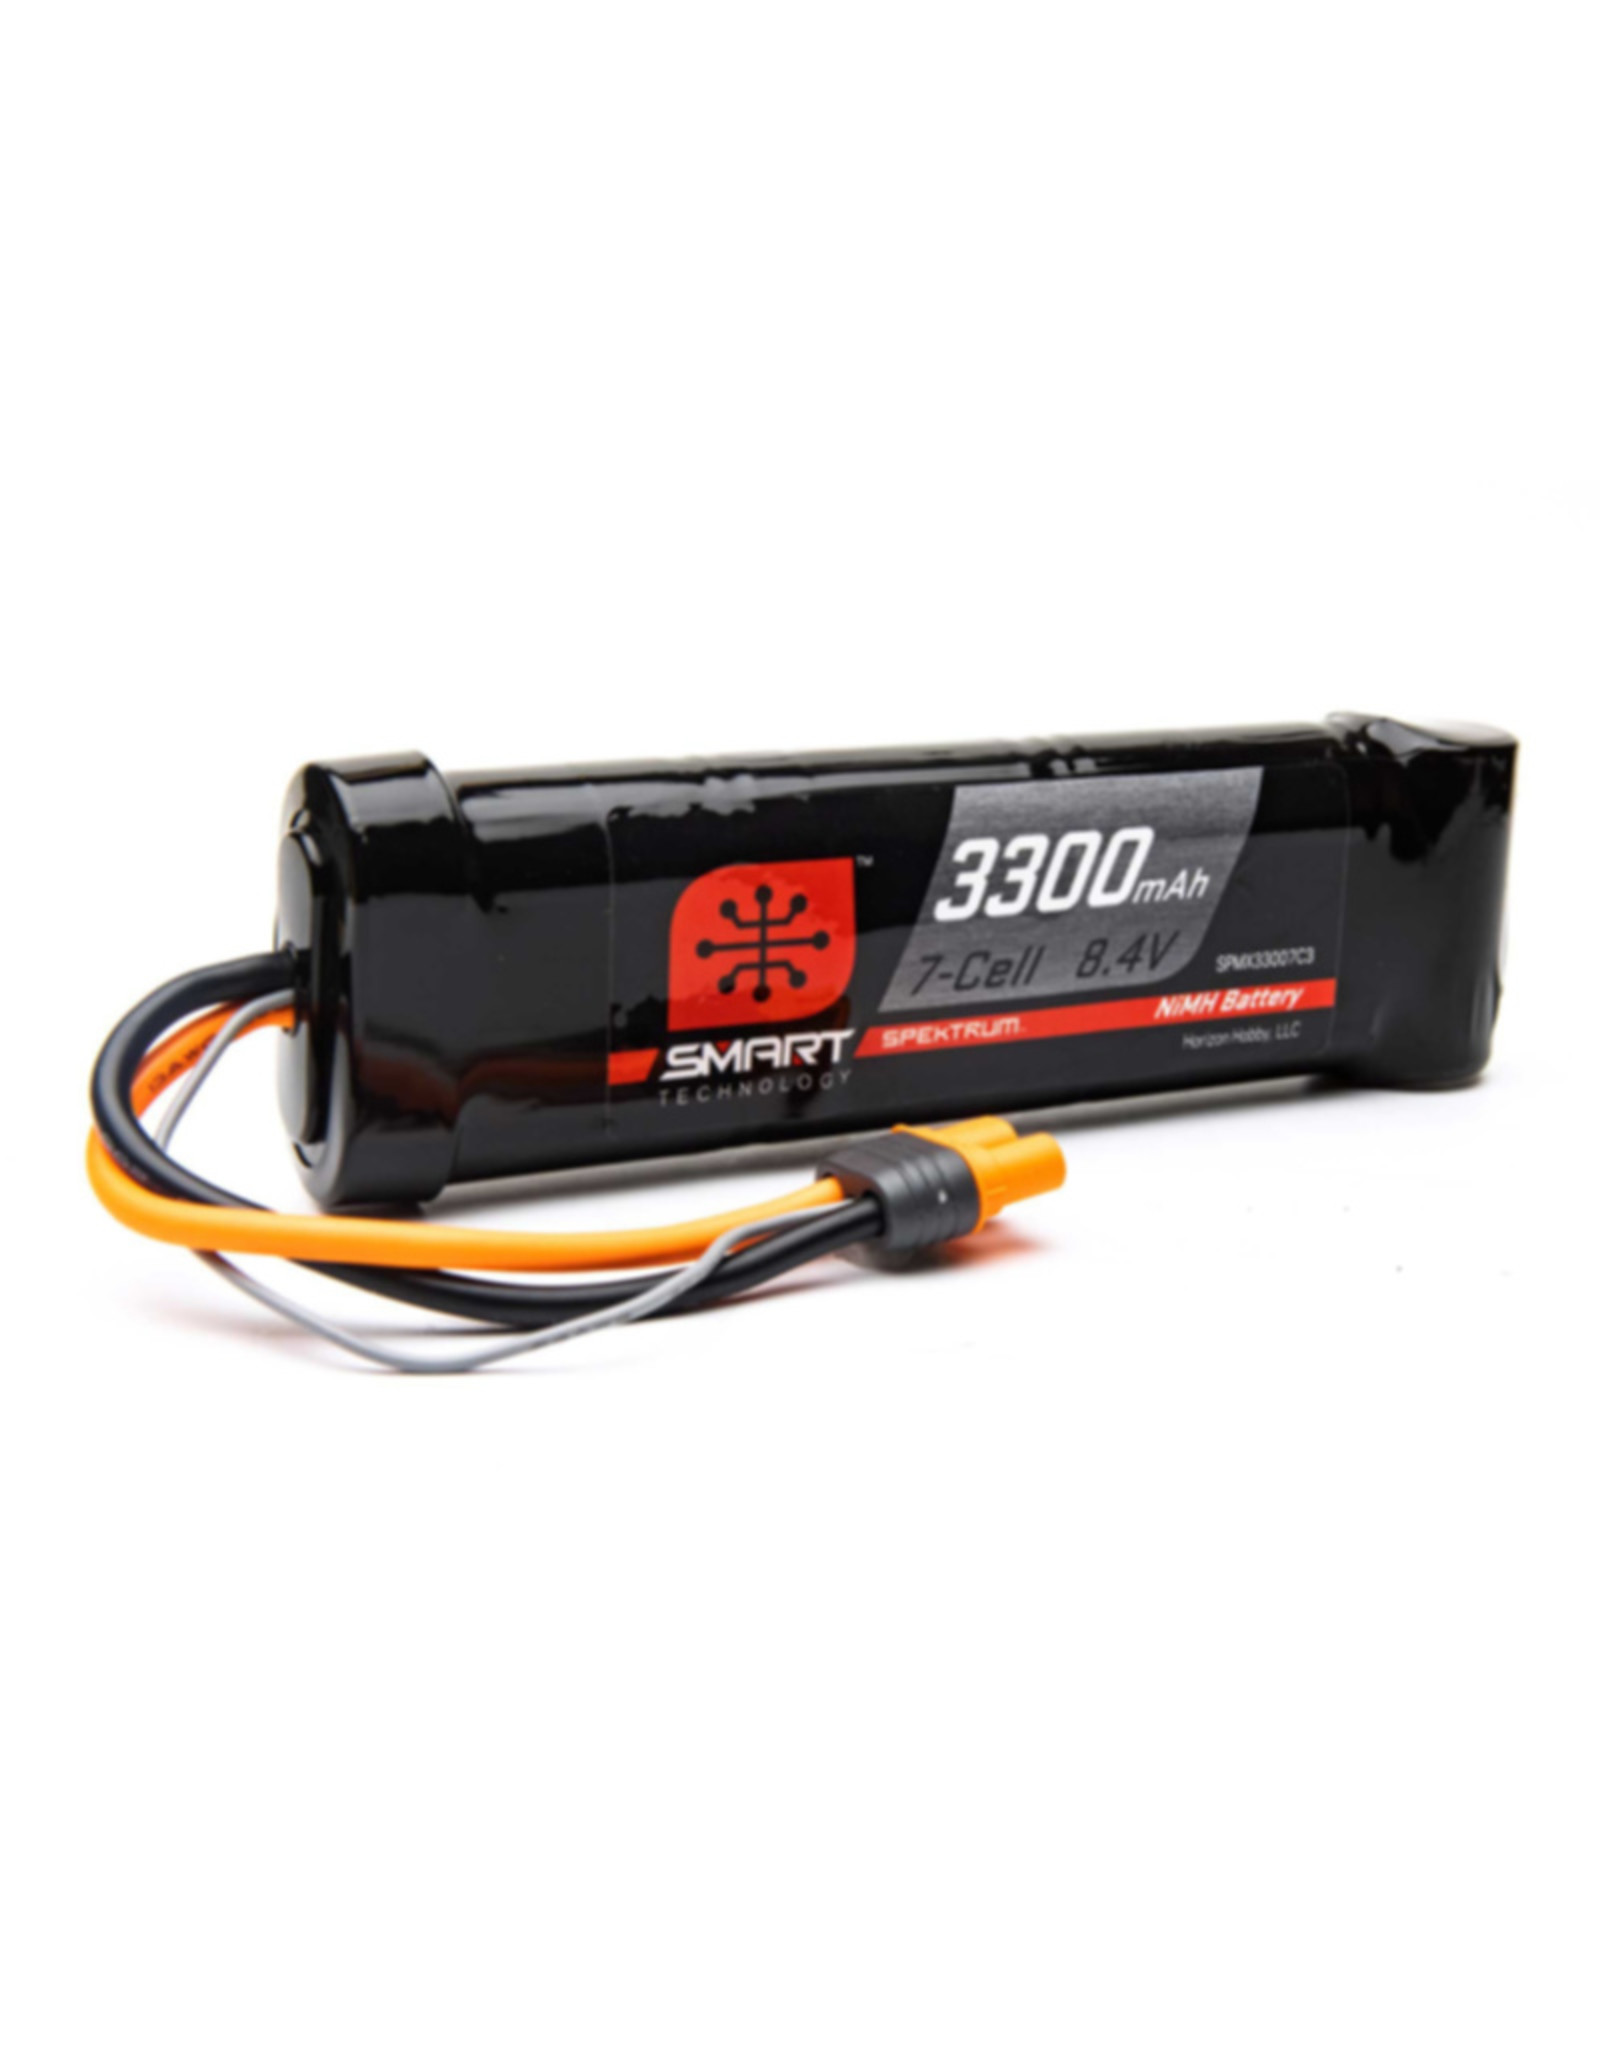 spektrum SPMX33007C3		3300mAh 7-Cell 8.4V Smart NiMH Battery; IC3